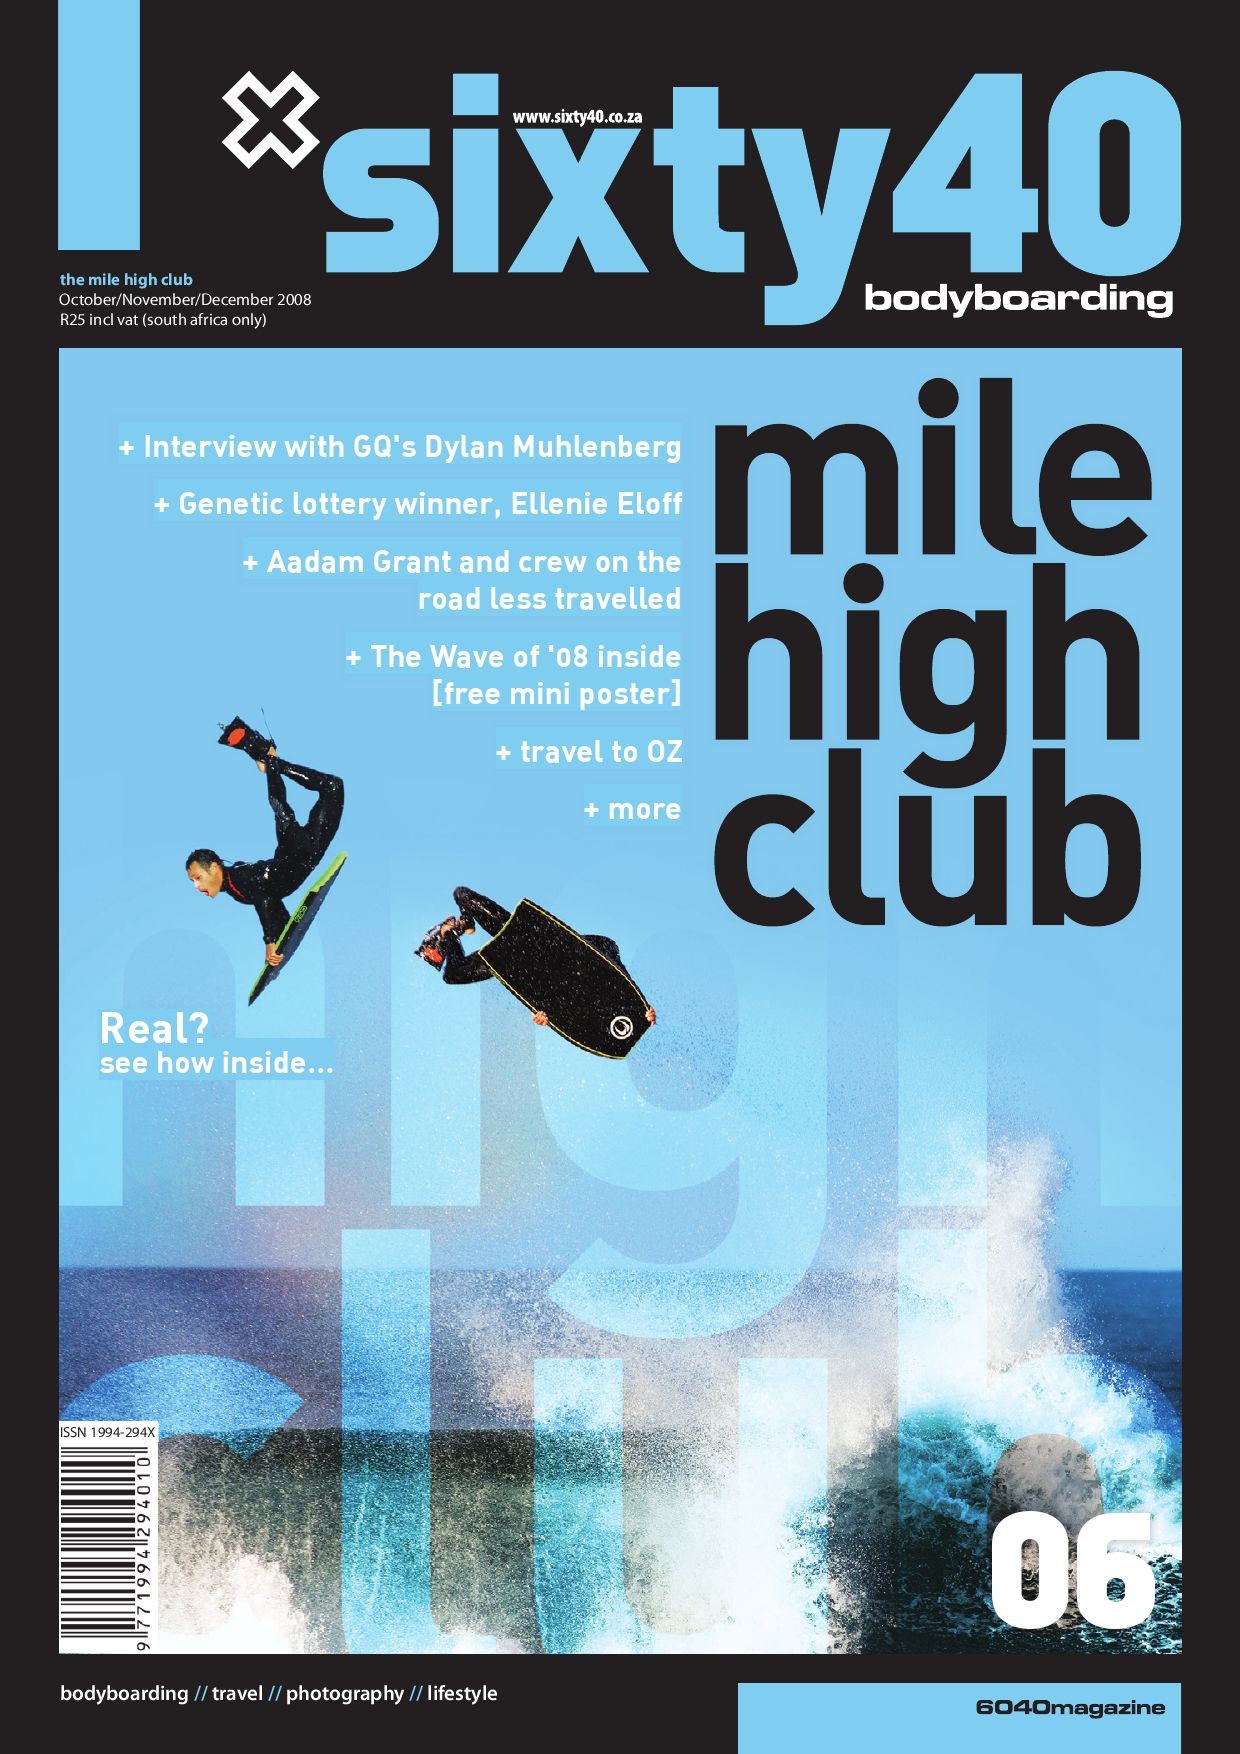 Sixty40 Bodyboarding Magazine - issue #06 - page 1